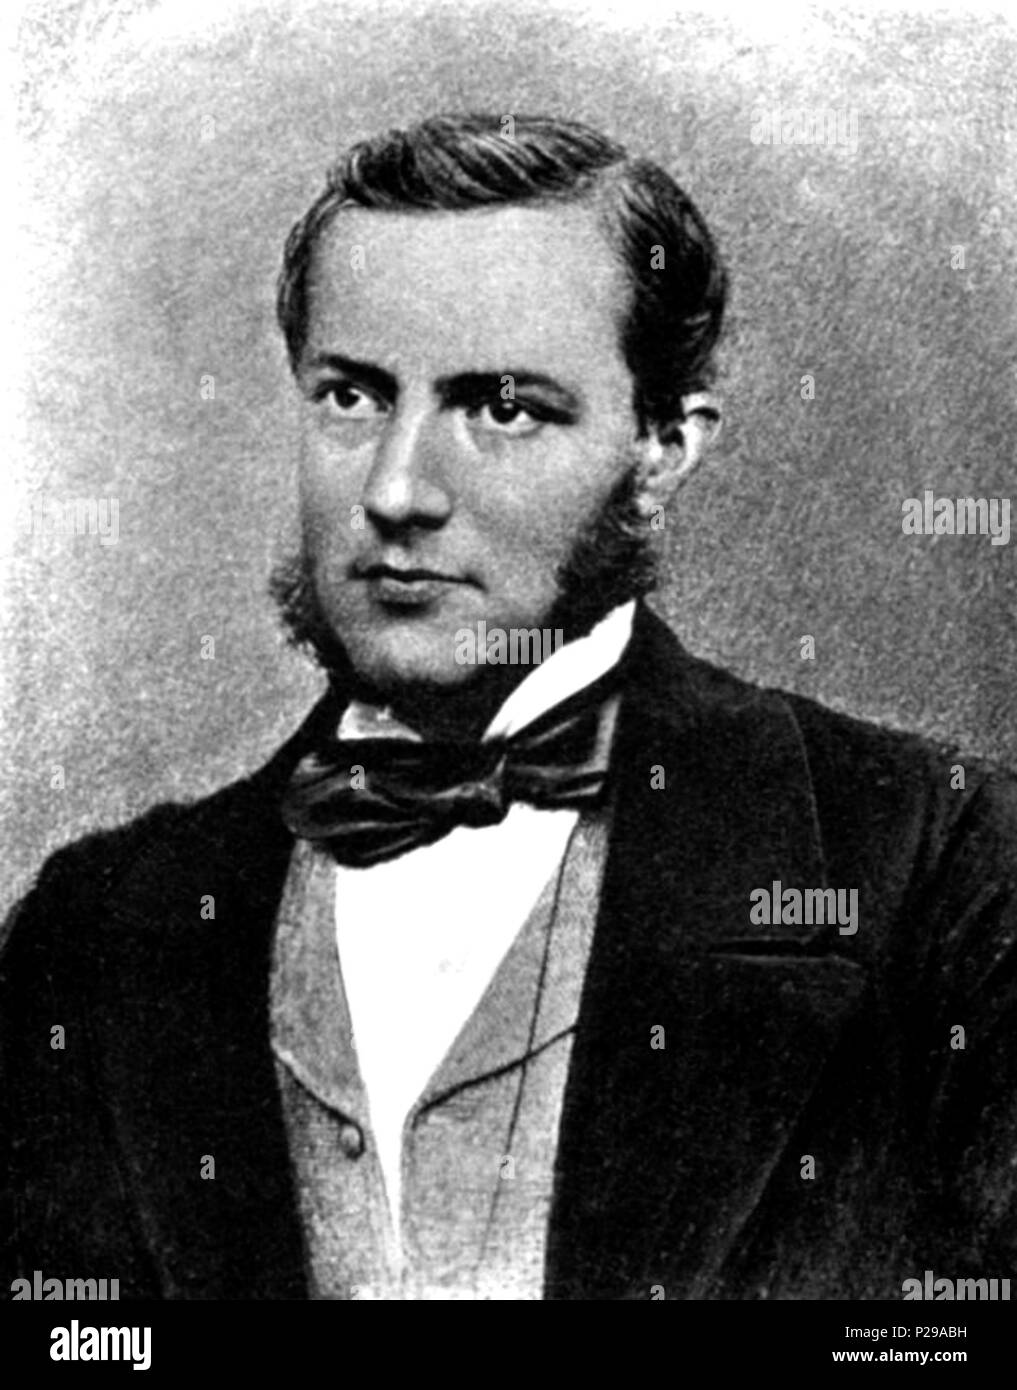 Diciembre de 1823 fotografías e imágenes de alta resolución - Alamy